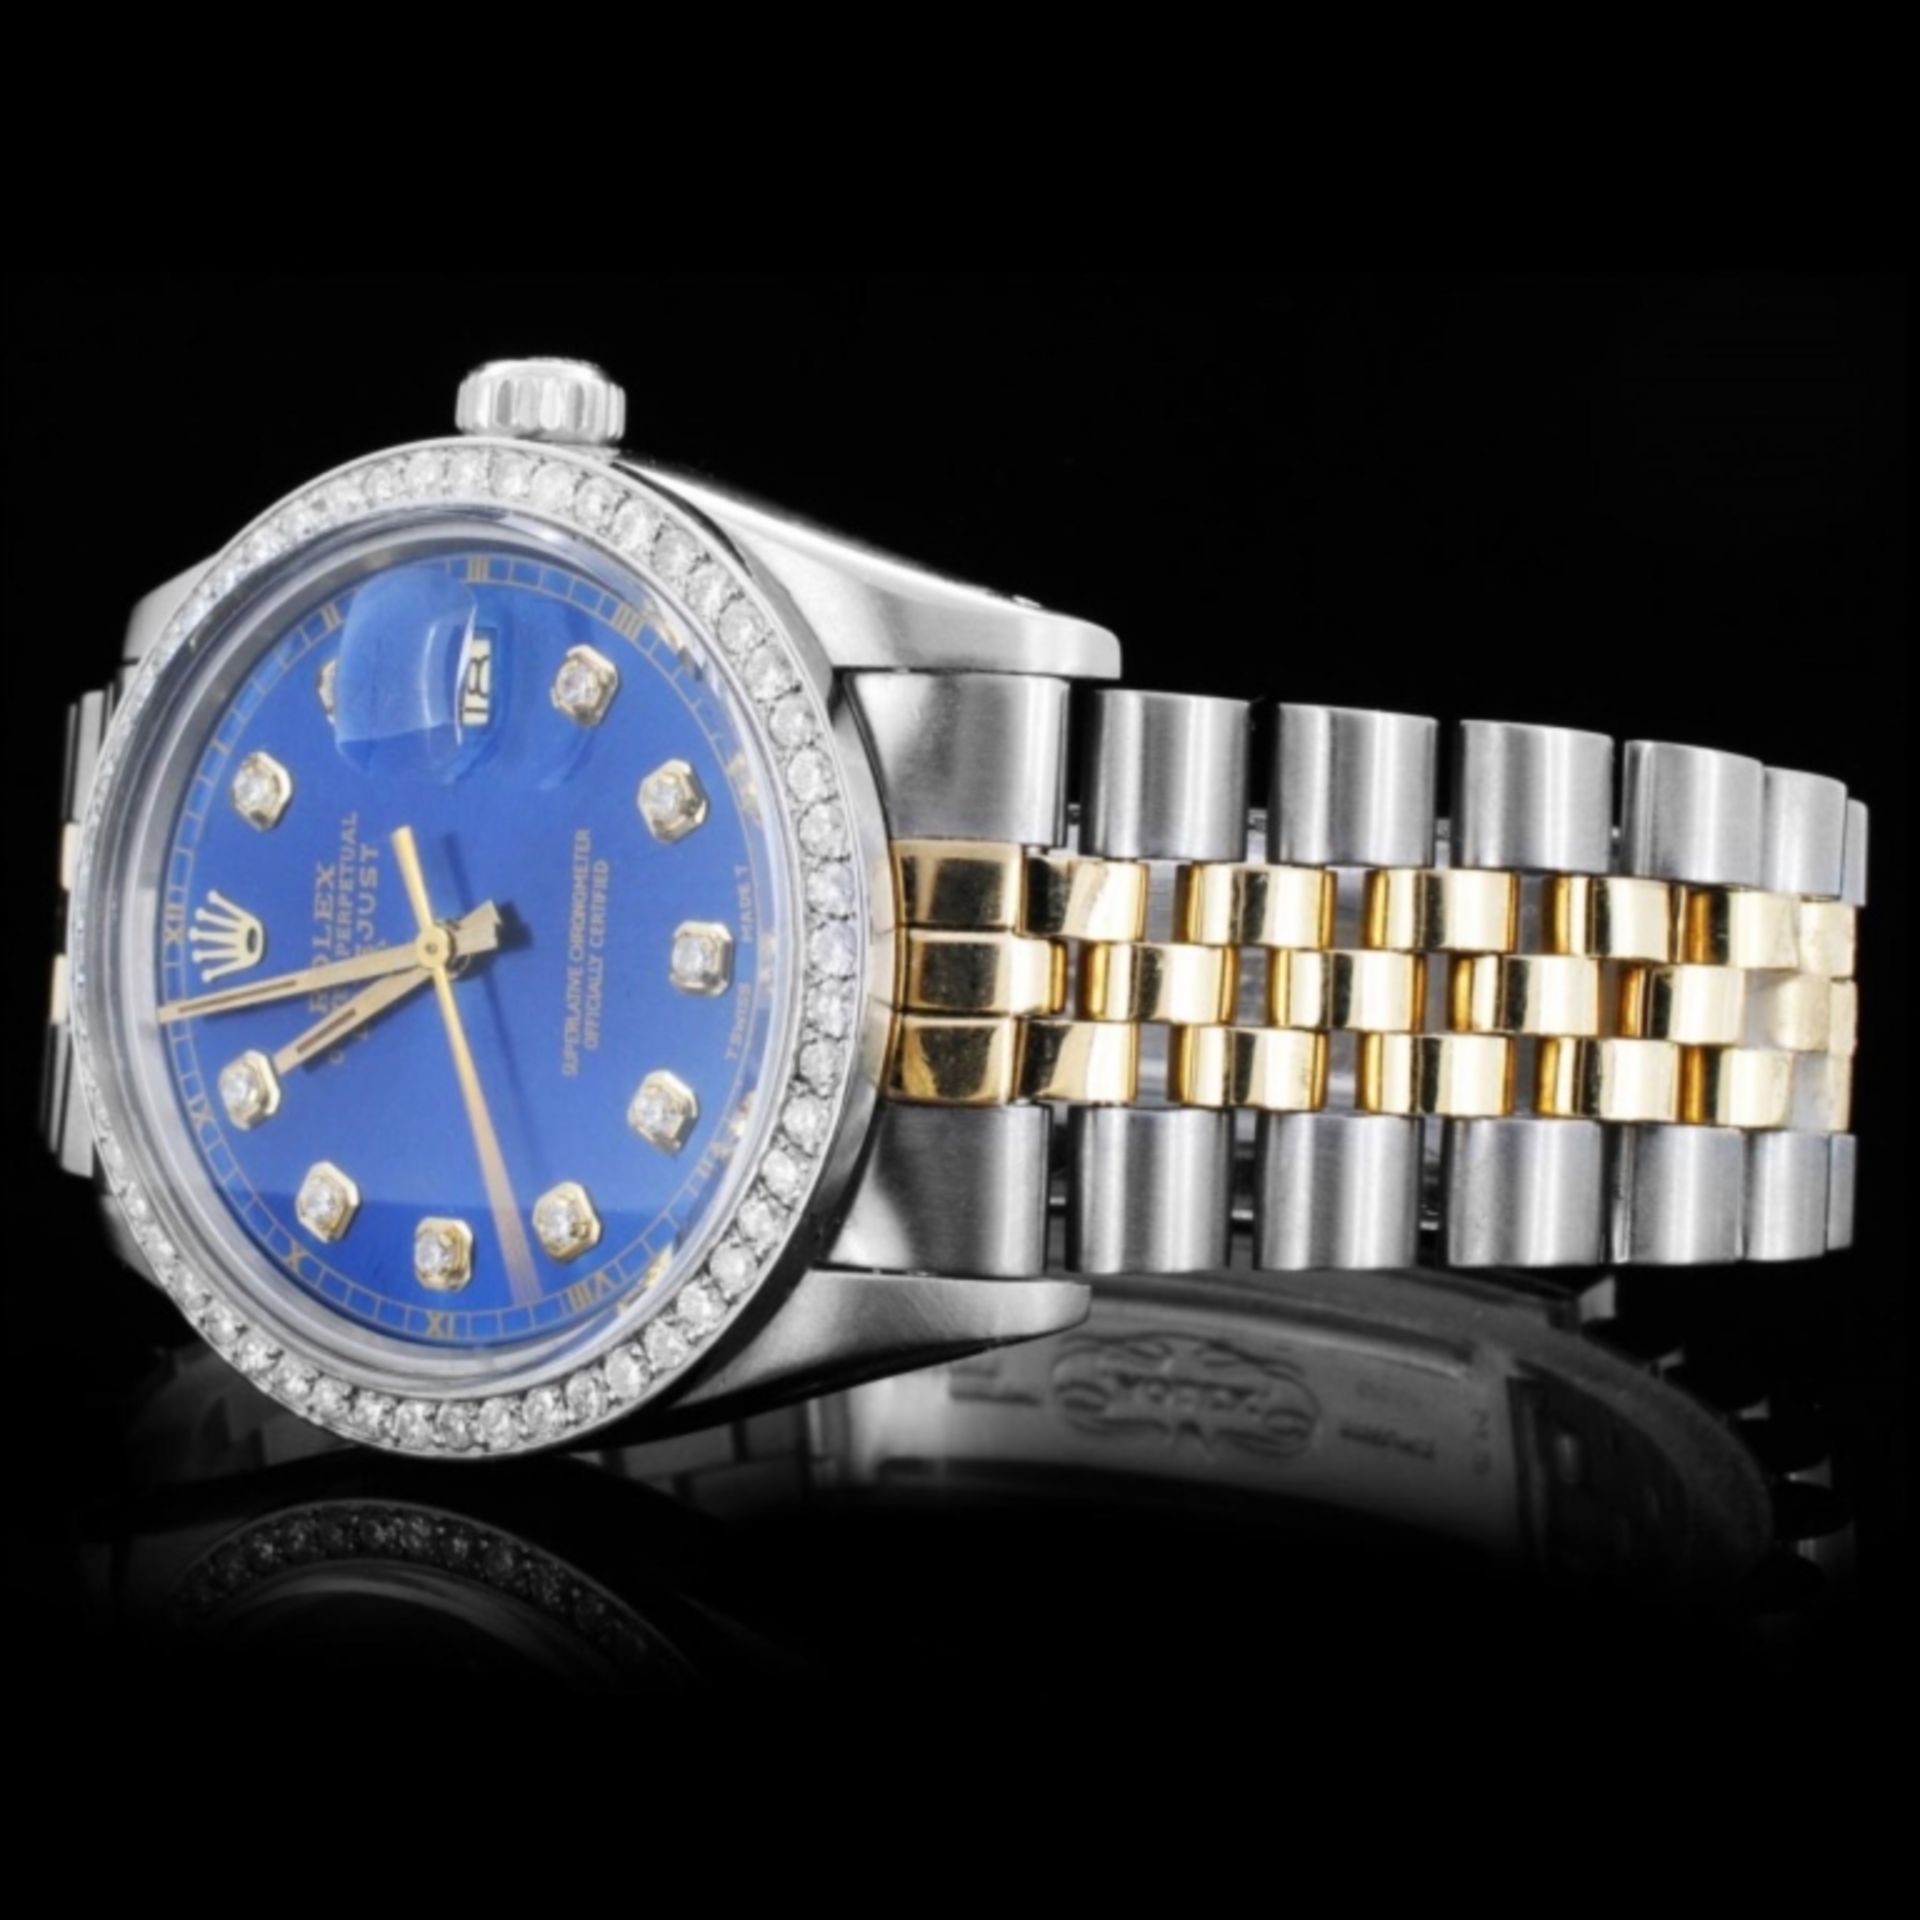 Rolex YG/SS DateJust Diamond 36mm Watch - Image 2 of 5